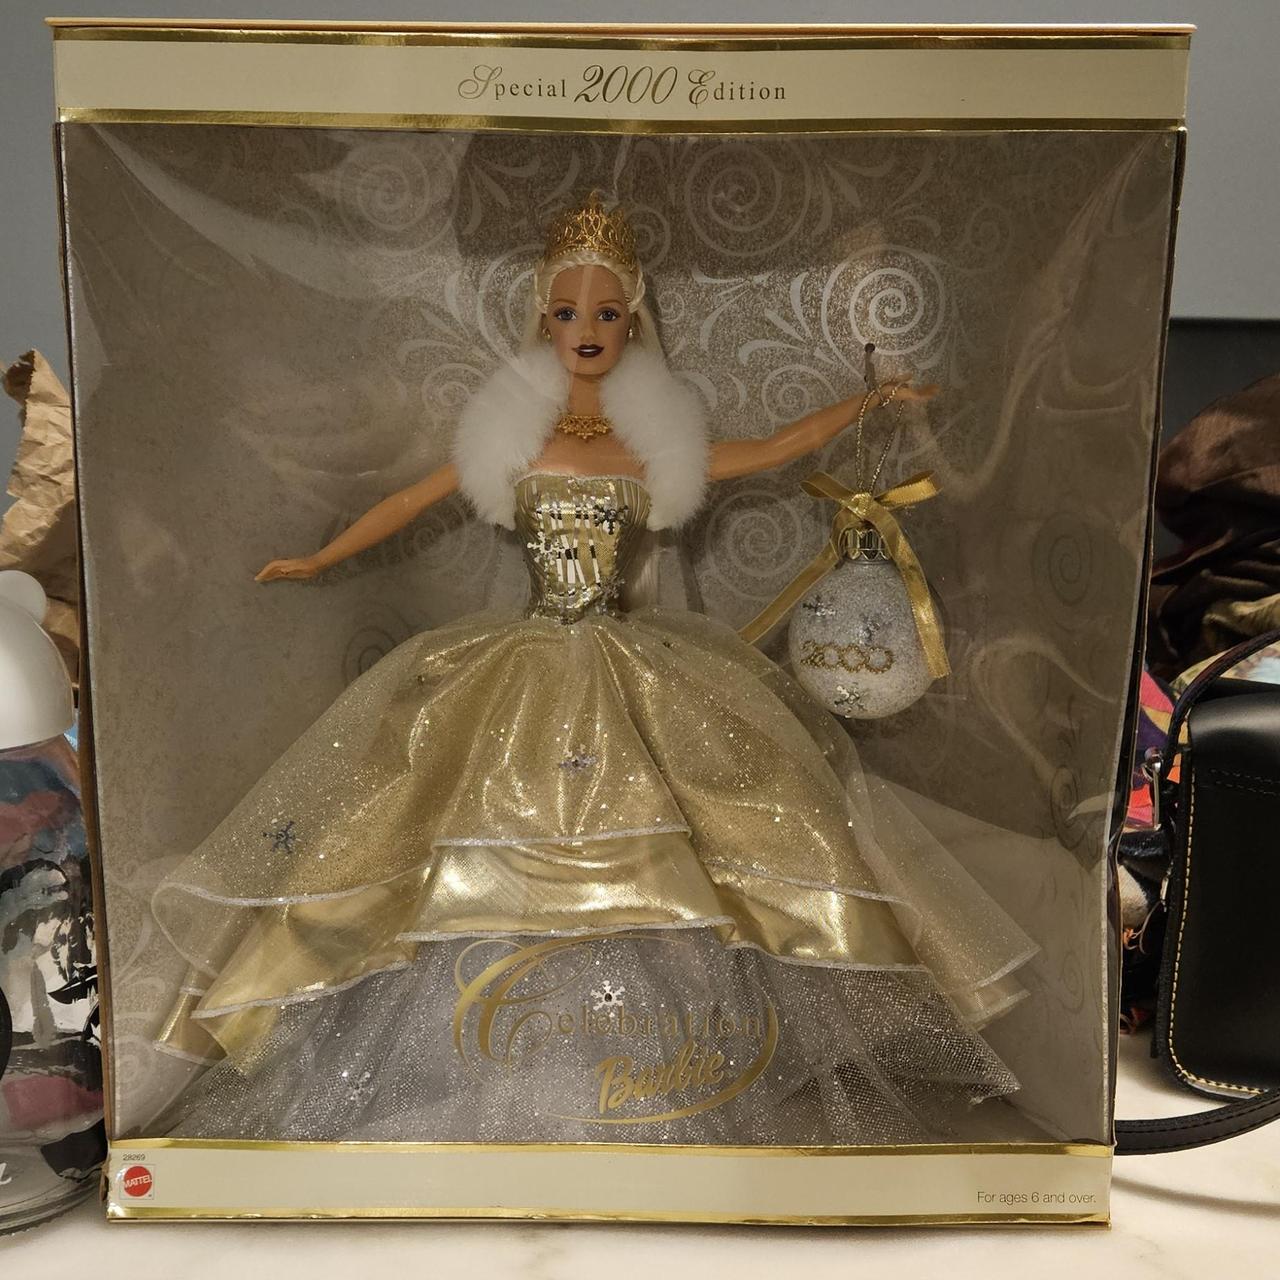 Barbie Mattel Inc. 1988 Thermos Soft Lunch Box - Depop